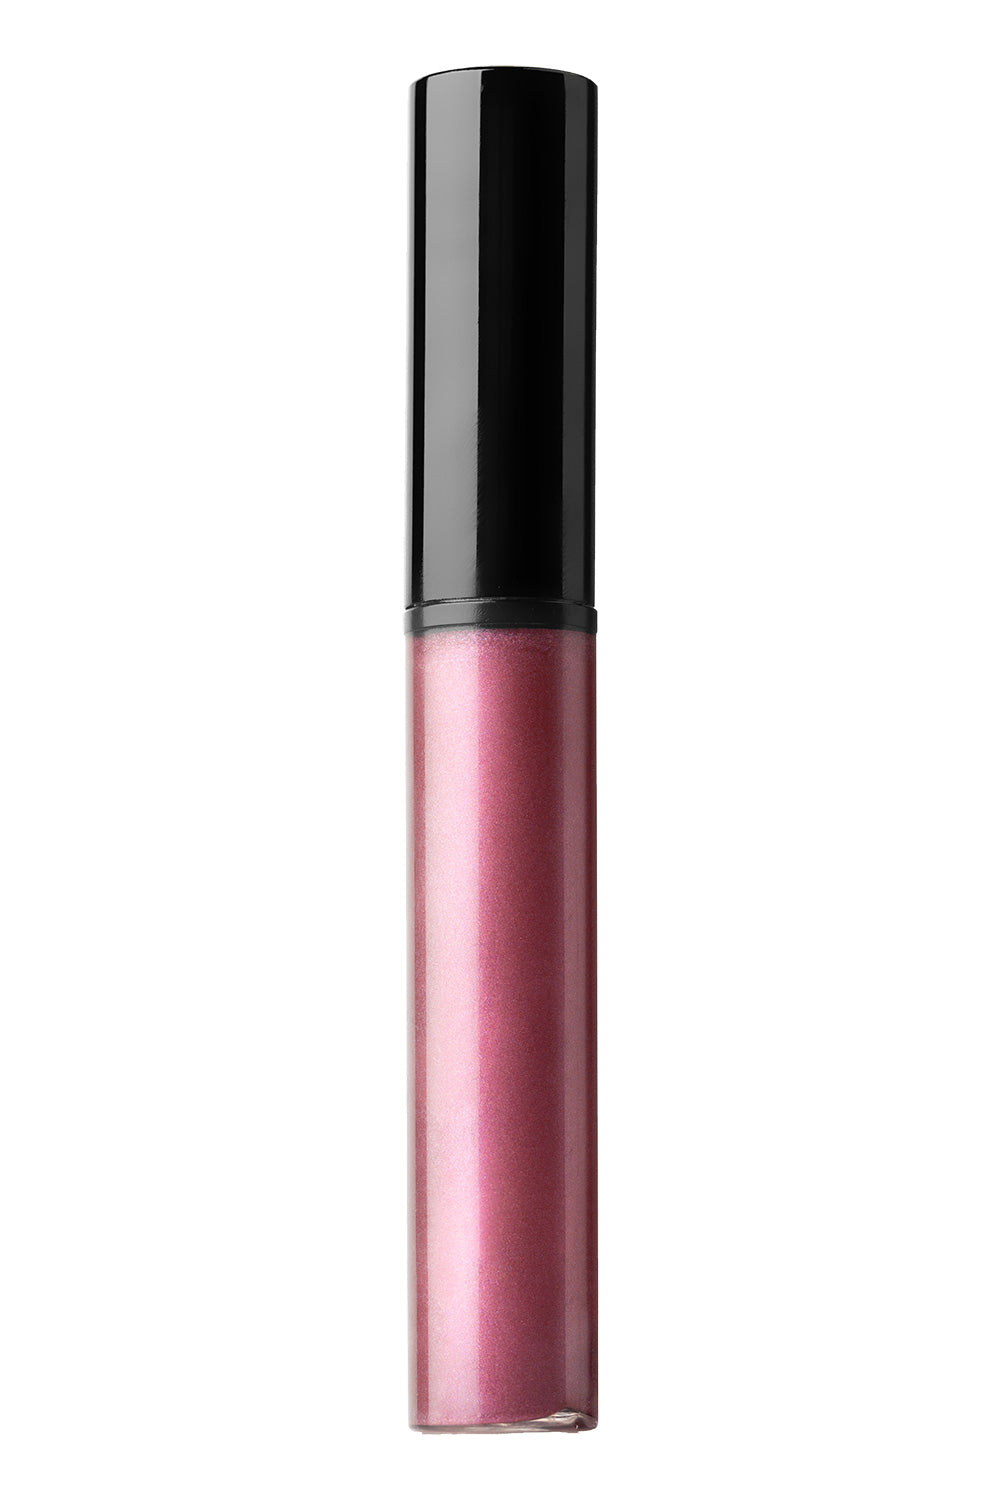 Boysenberry - Type 2 Lip Gloss